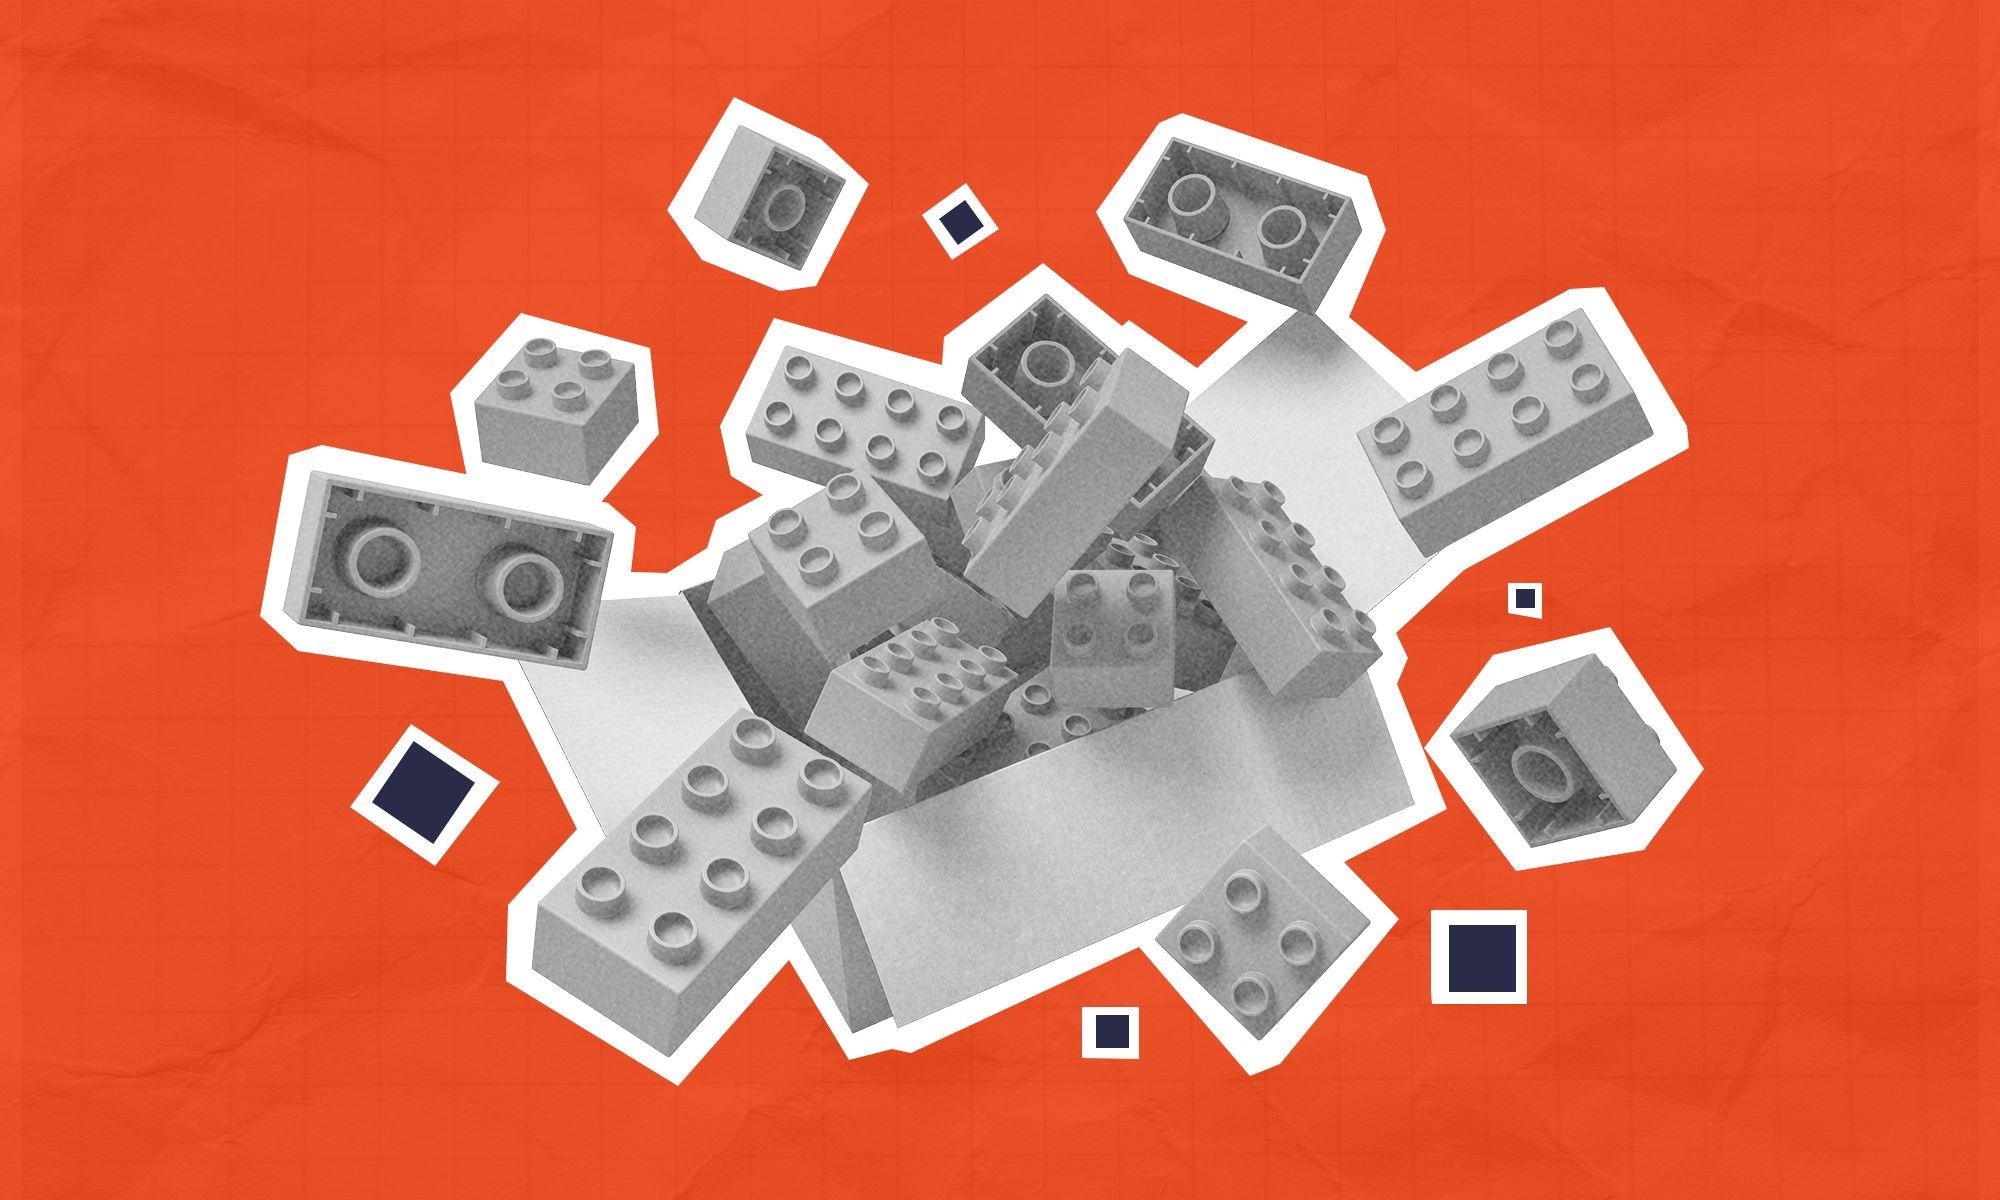 An assortment of legos bursting from a cardboard box.